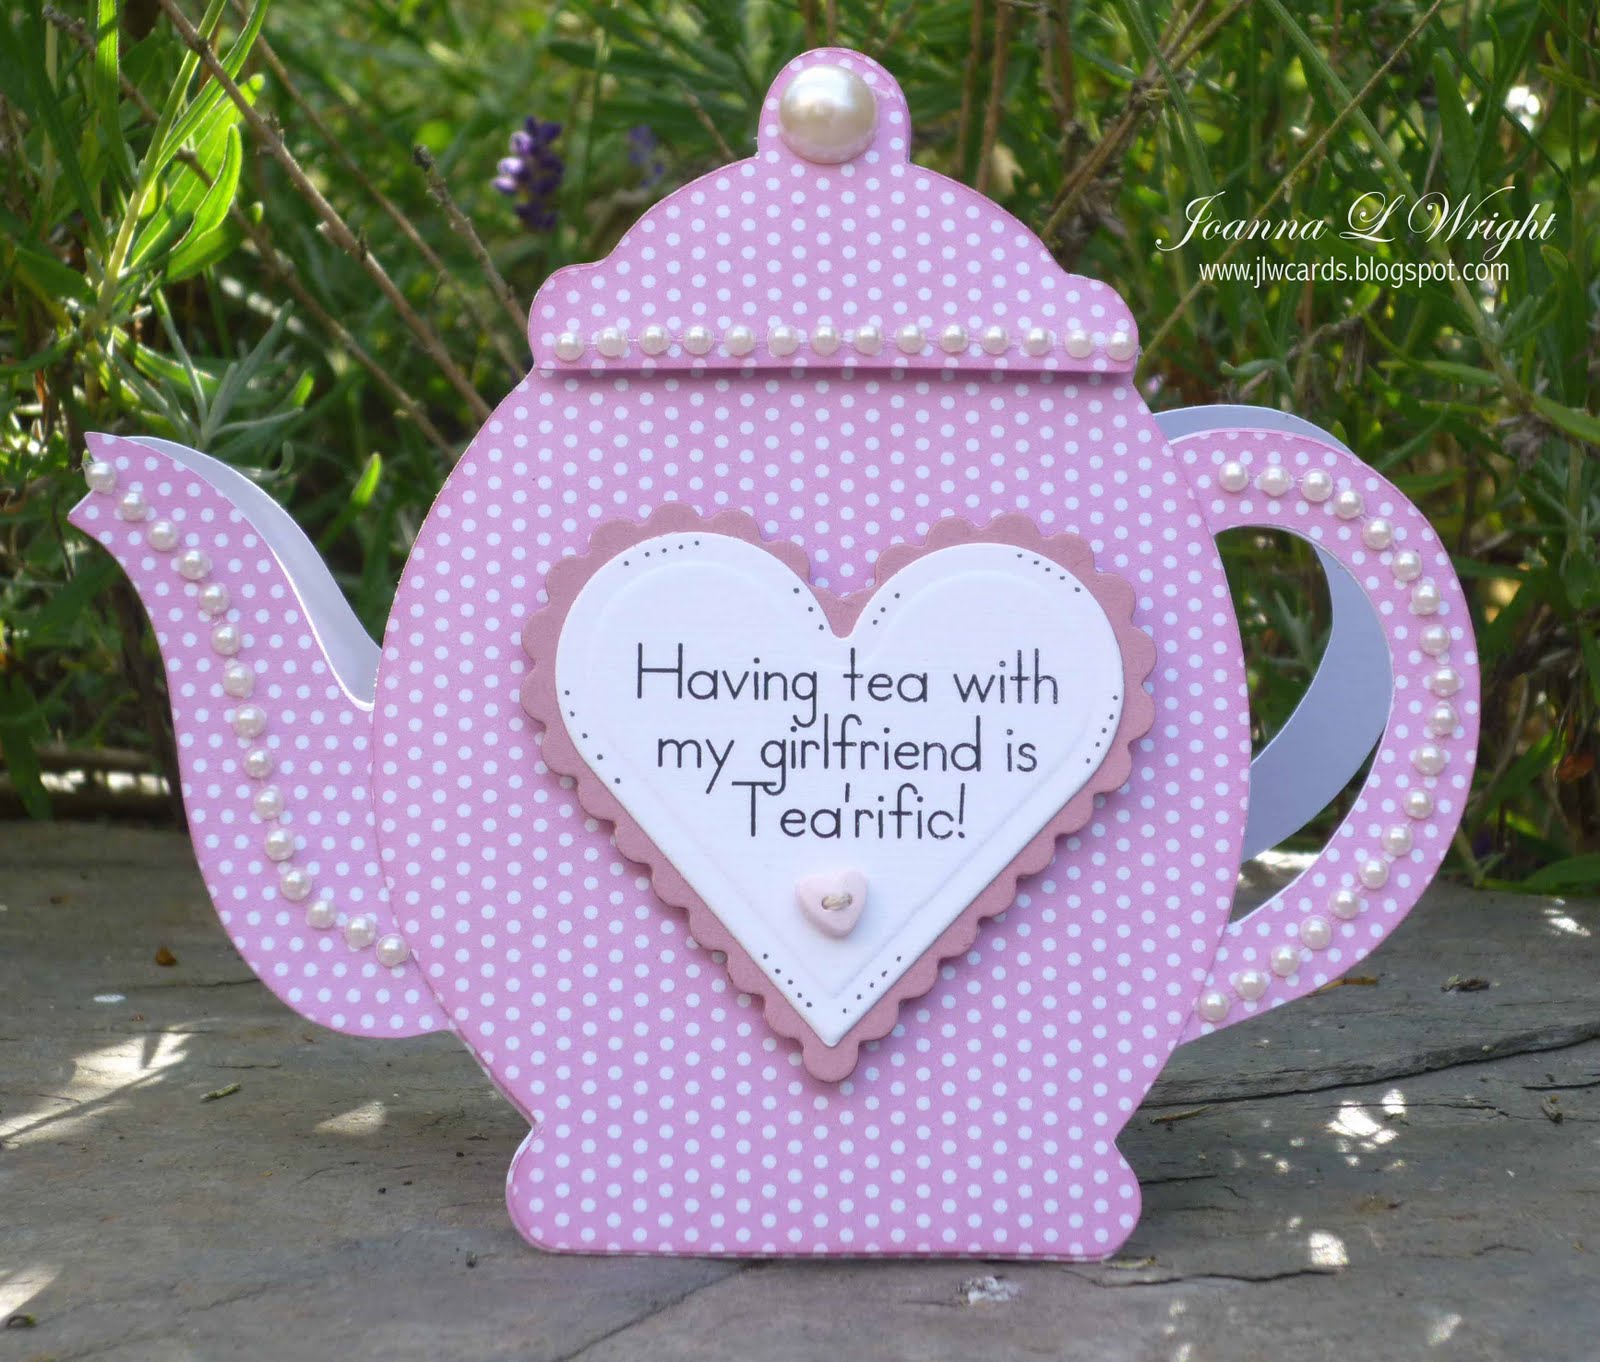 Teapot Invitations